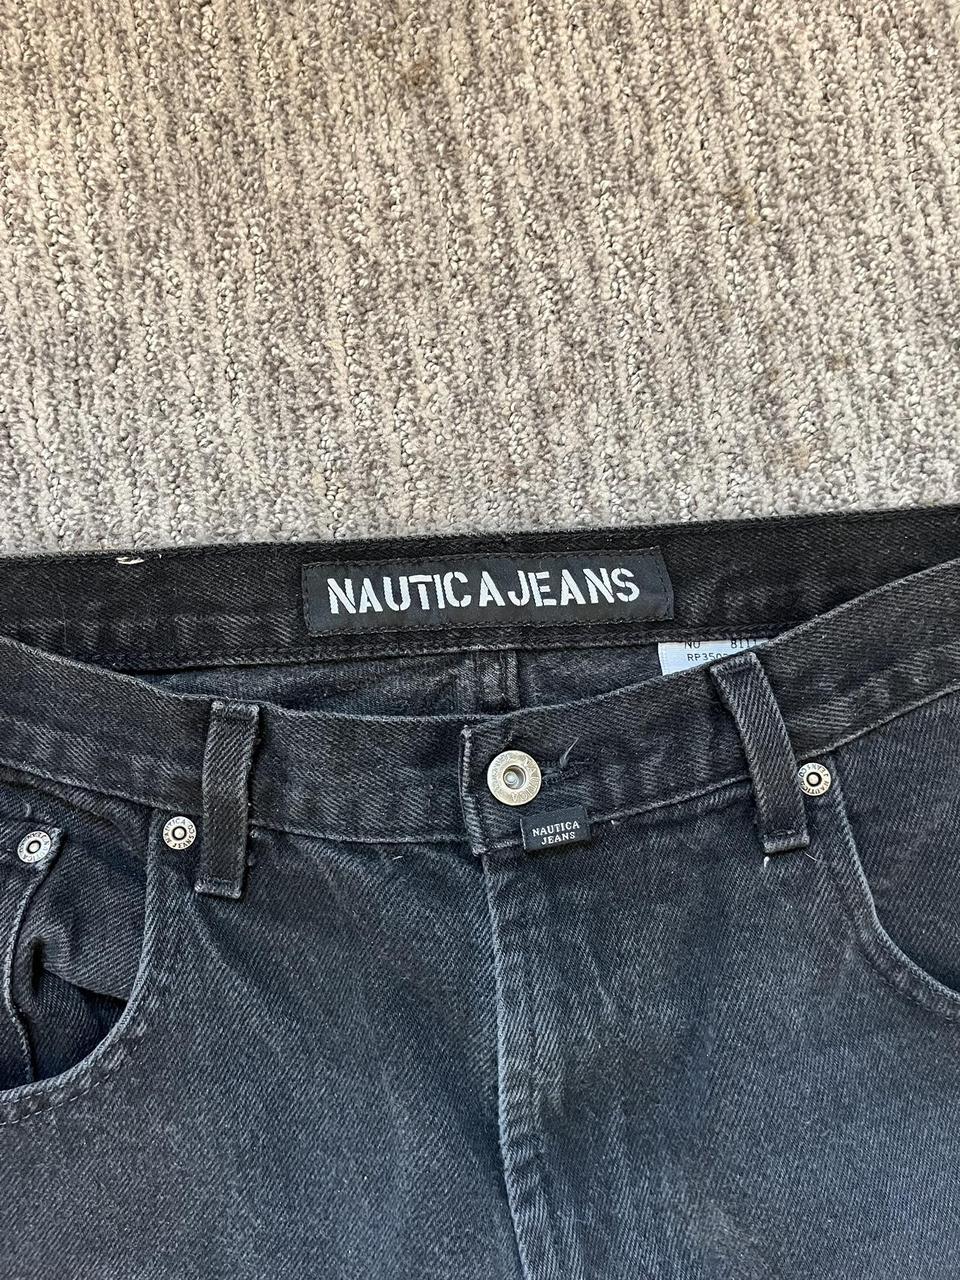 Nautica Men's Black Jeans (4)